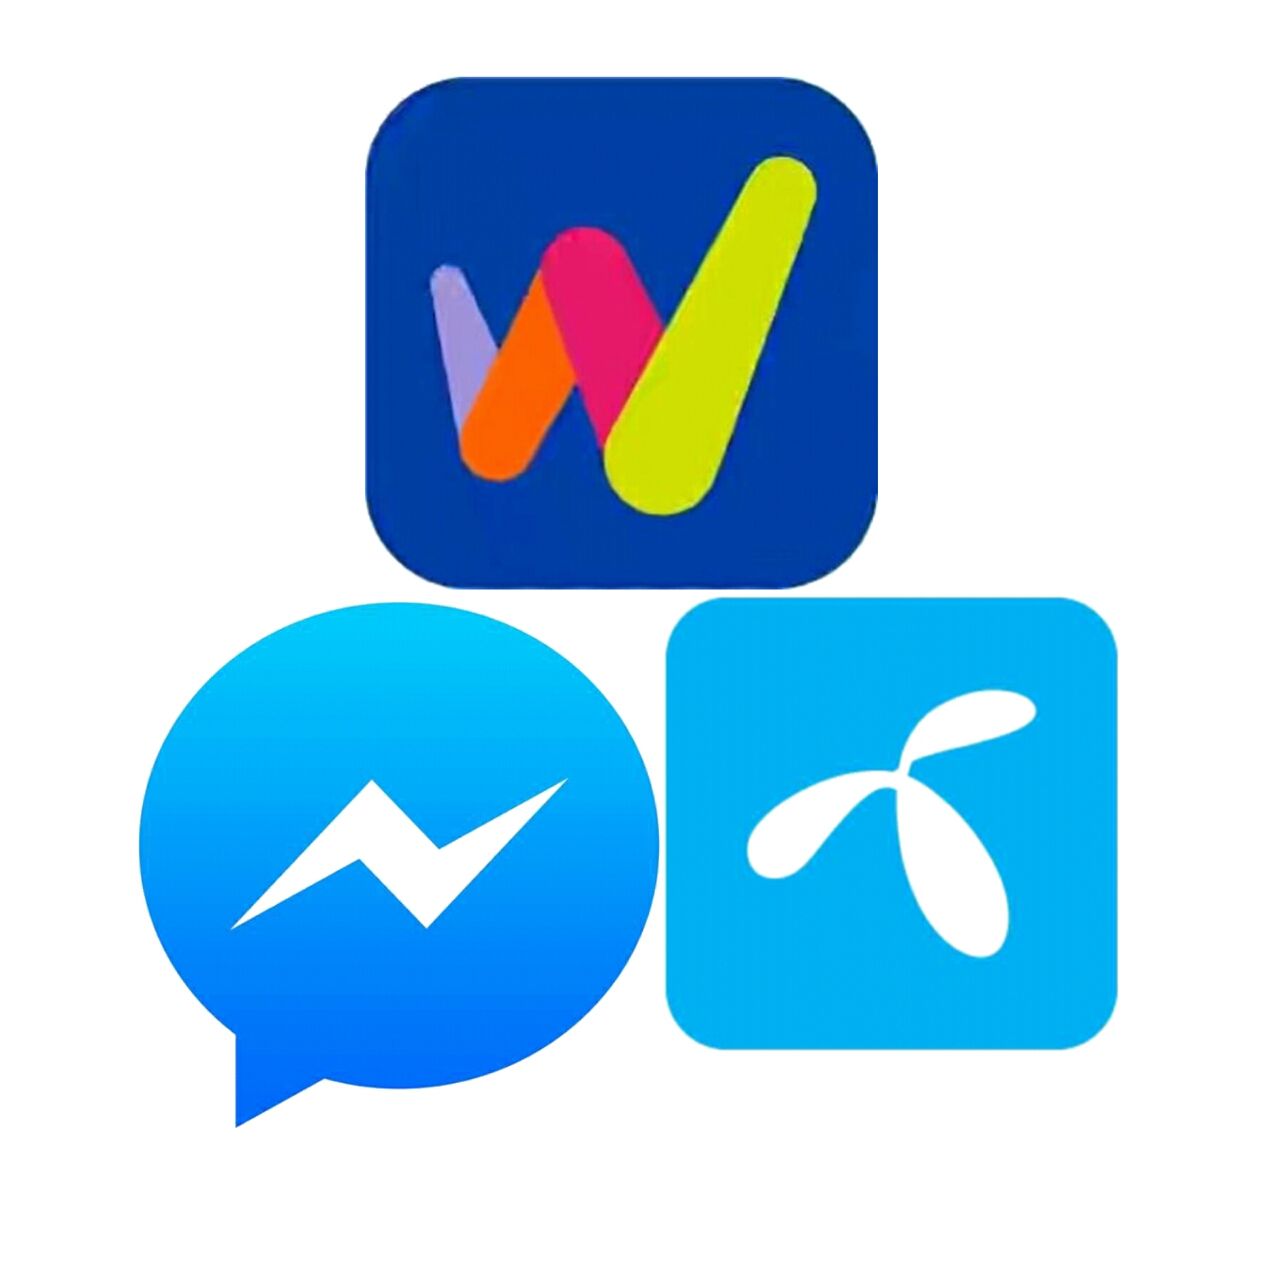 FREE তে Download করে নিন [Messenger, Wowbox, MyGP, Latest Version]App Only GP ইউজার রা।